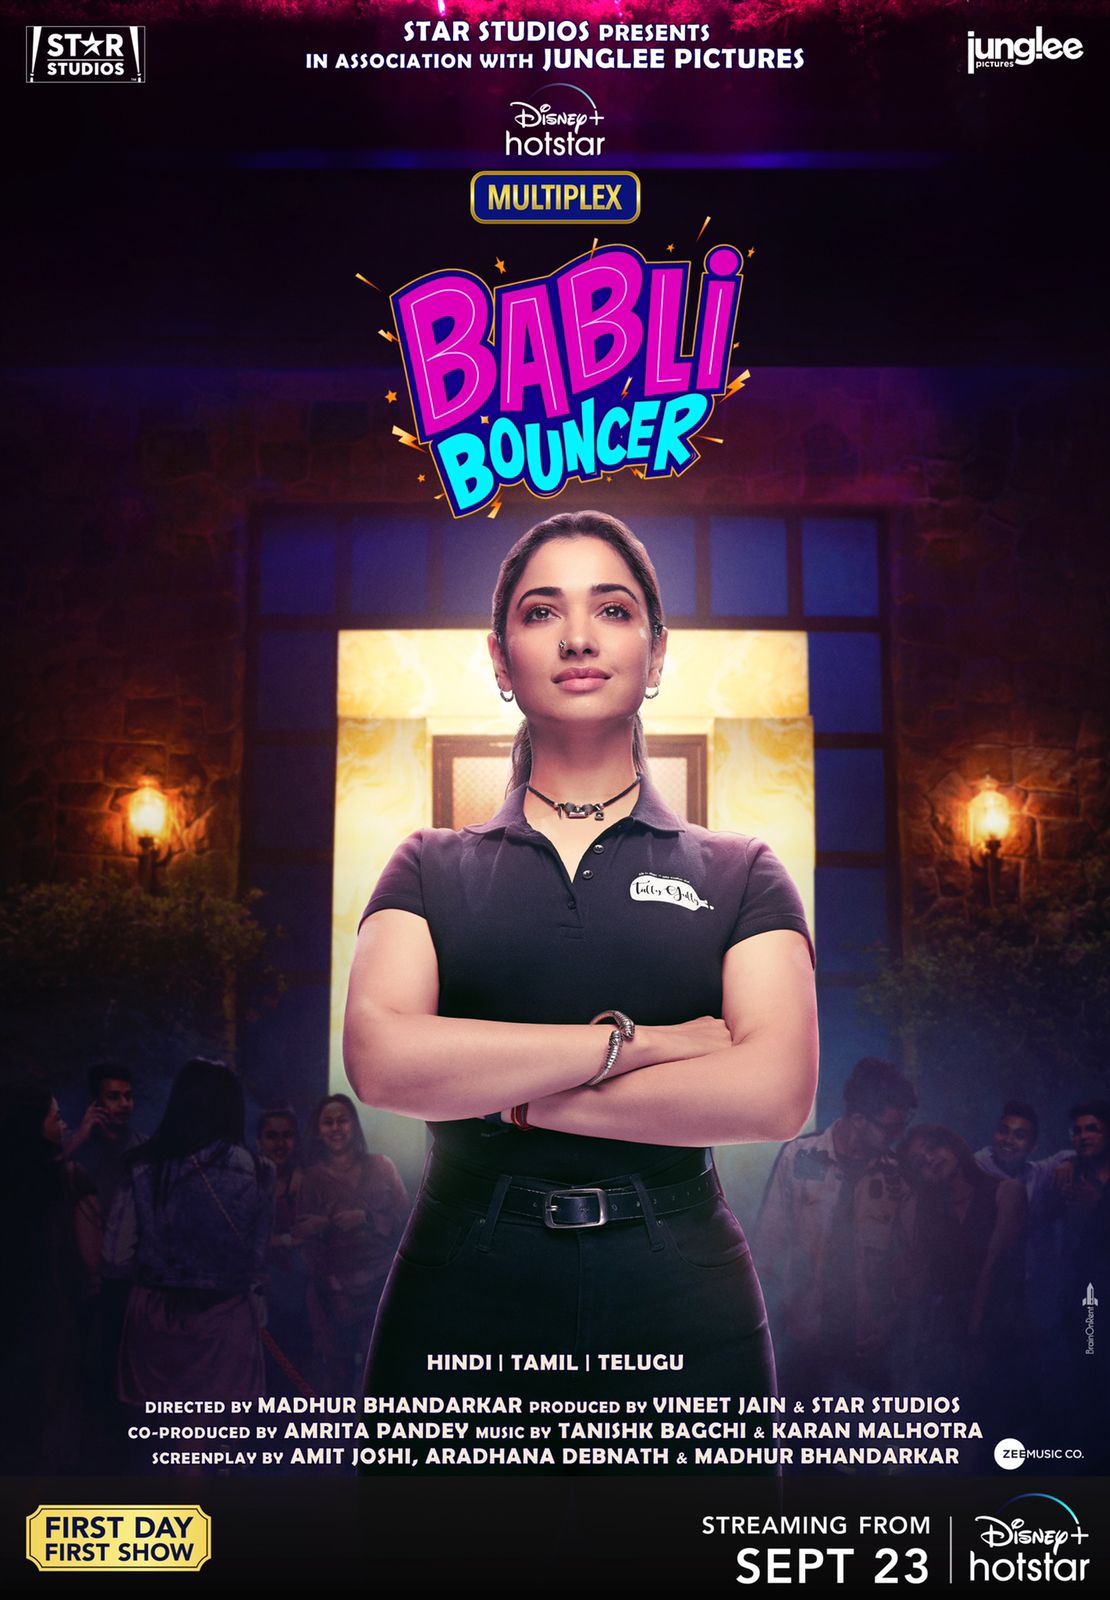 Tamannaah Bhatia Babli Bouncer Movie Dubbing Work Finished